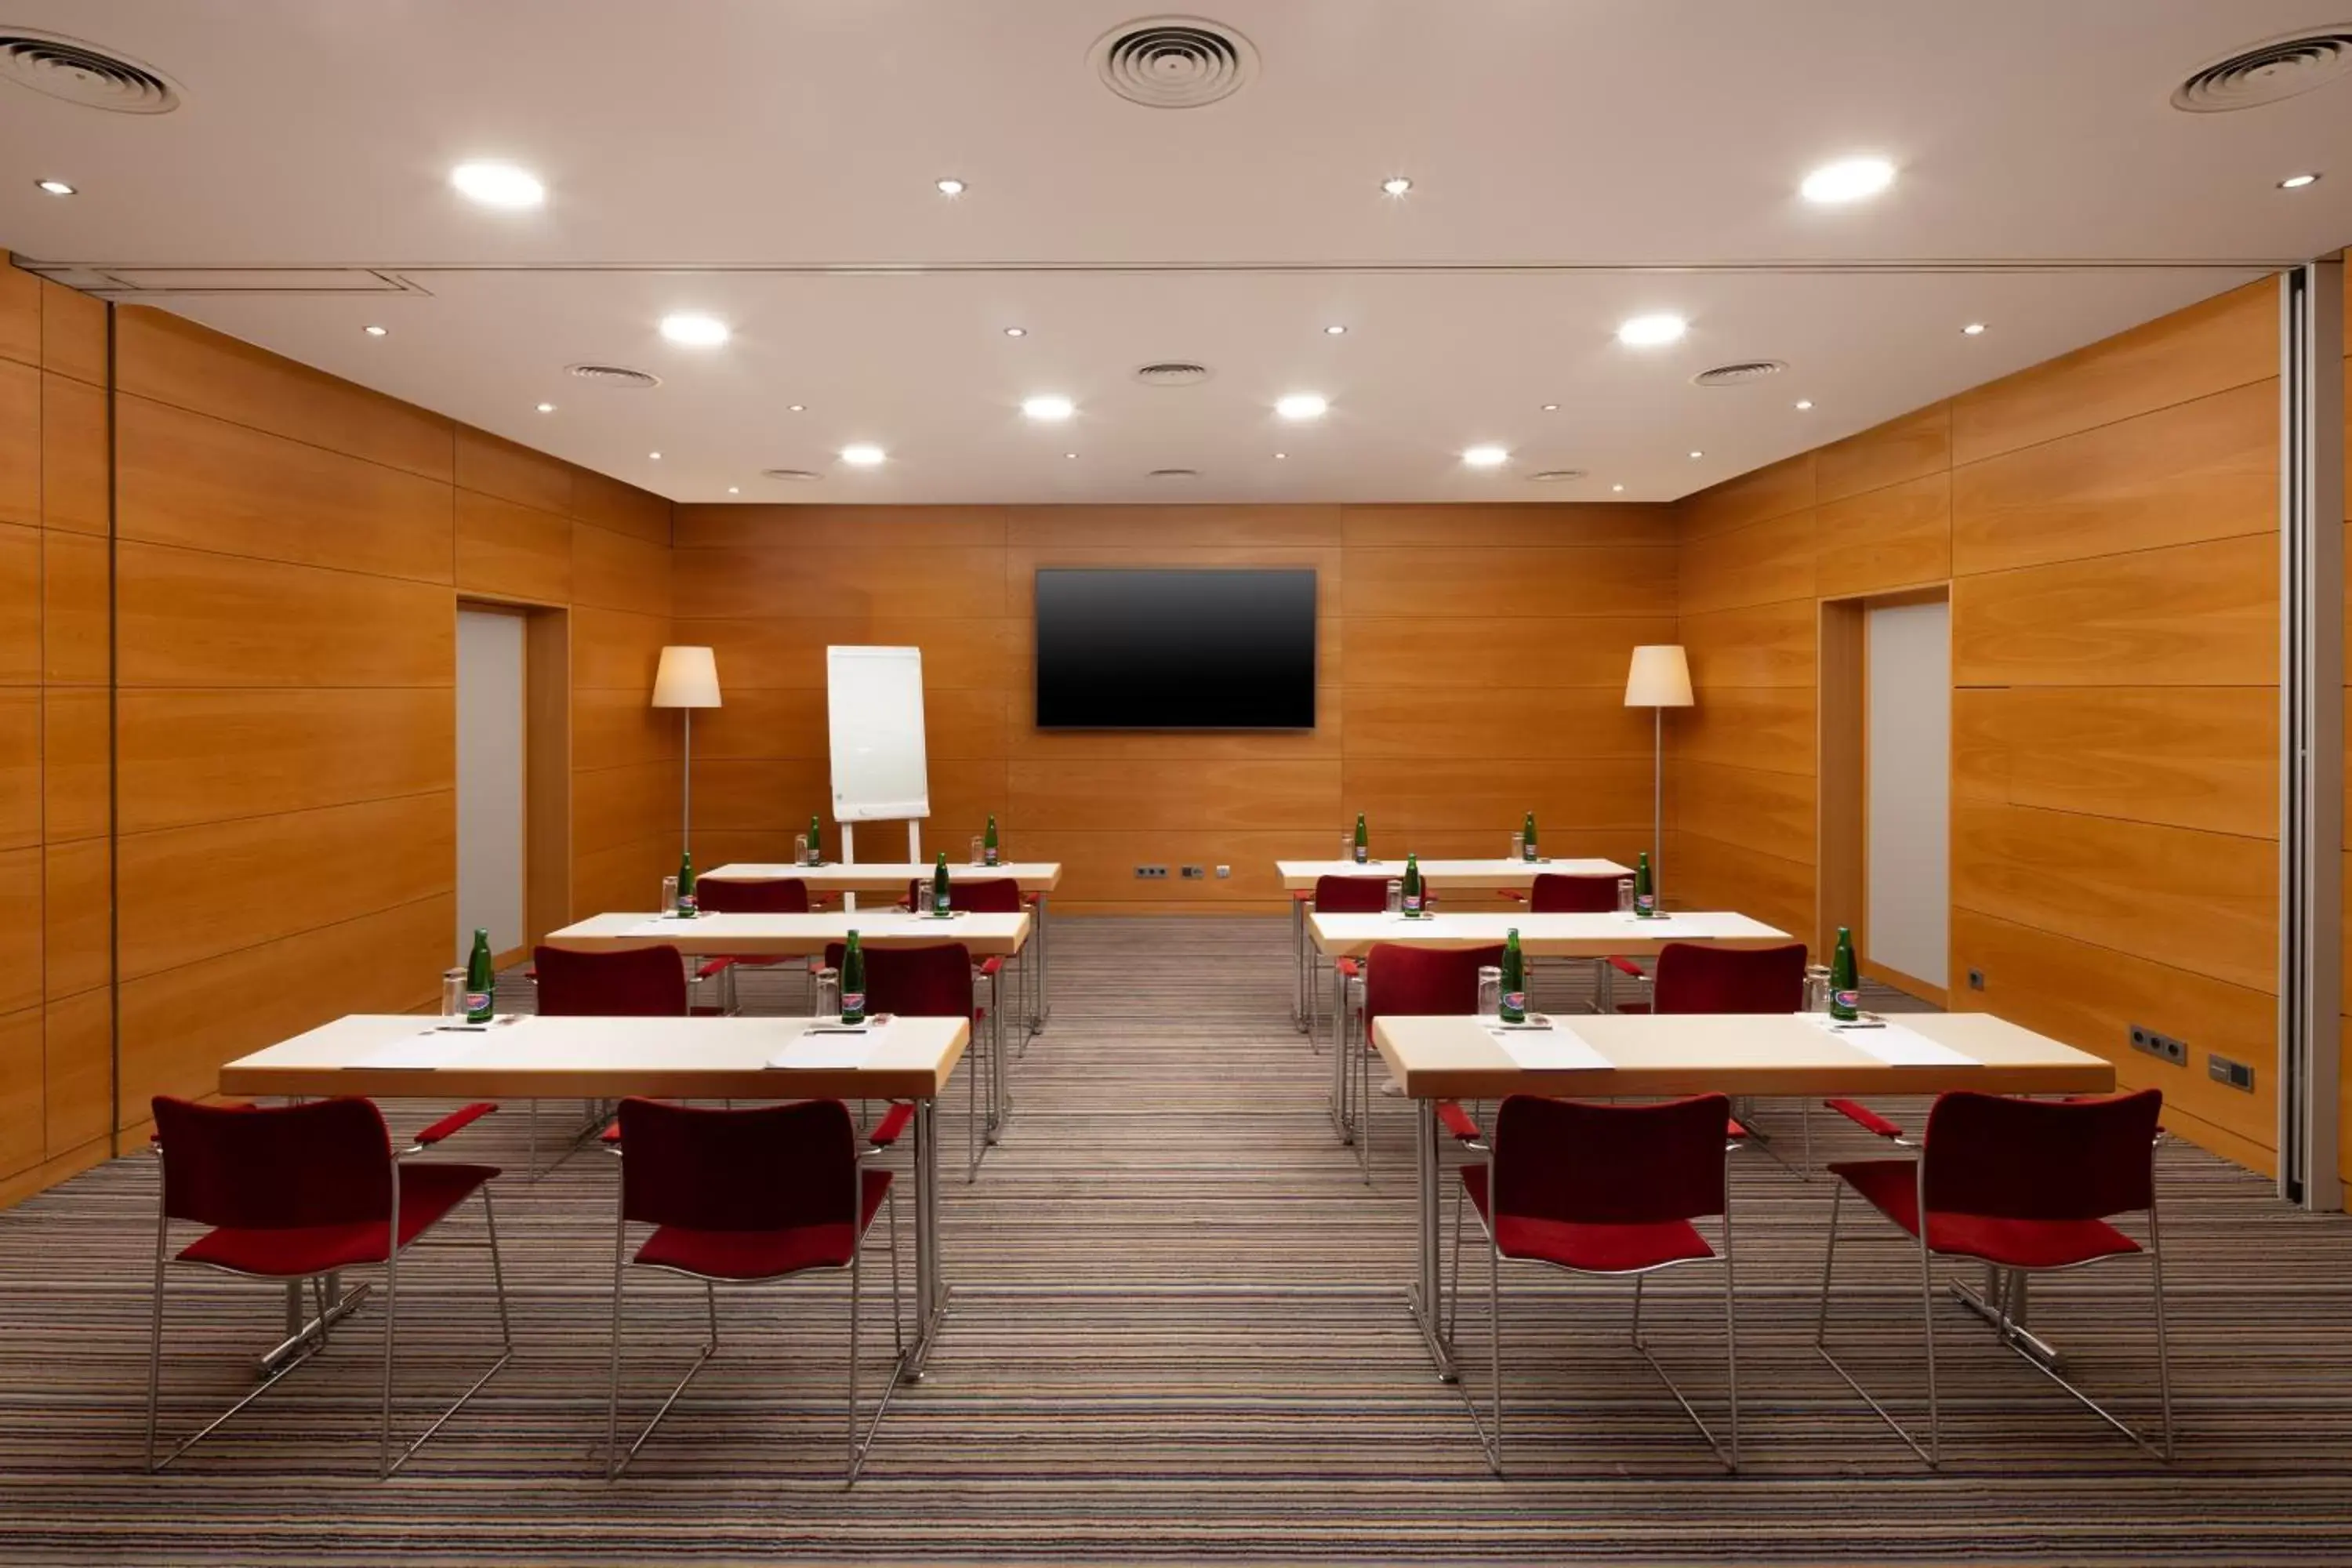 Meeting/conference room in K+K Hotel Fenix